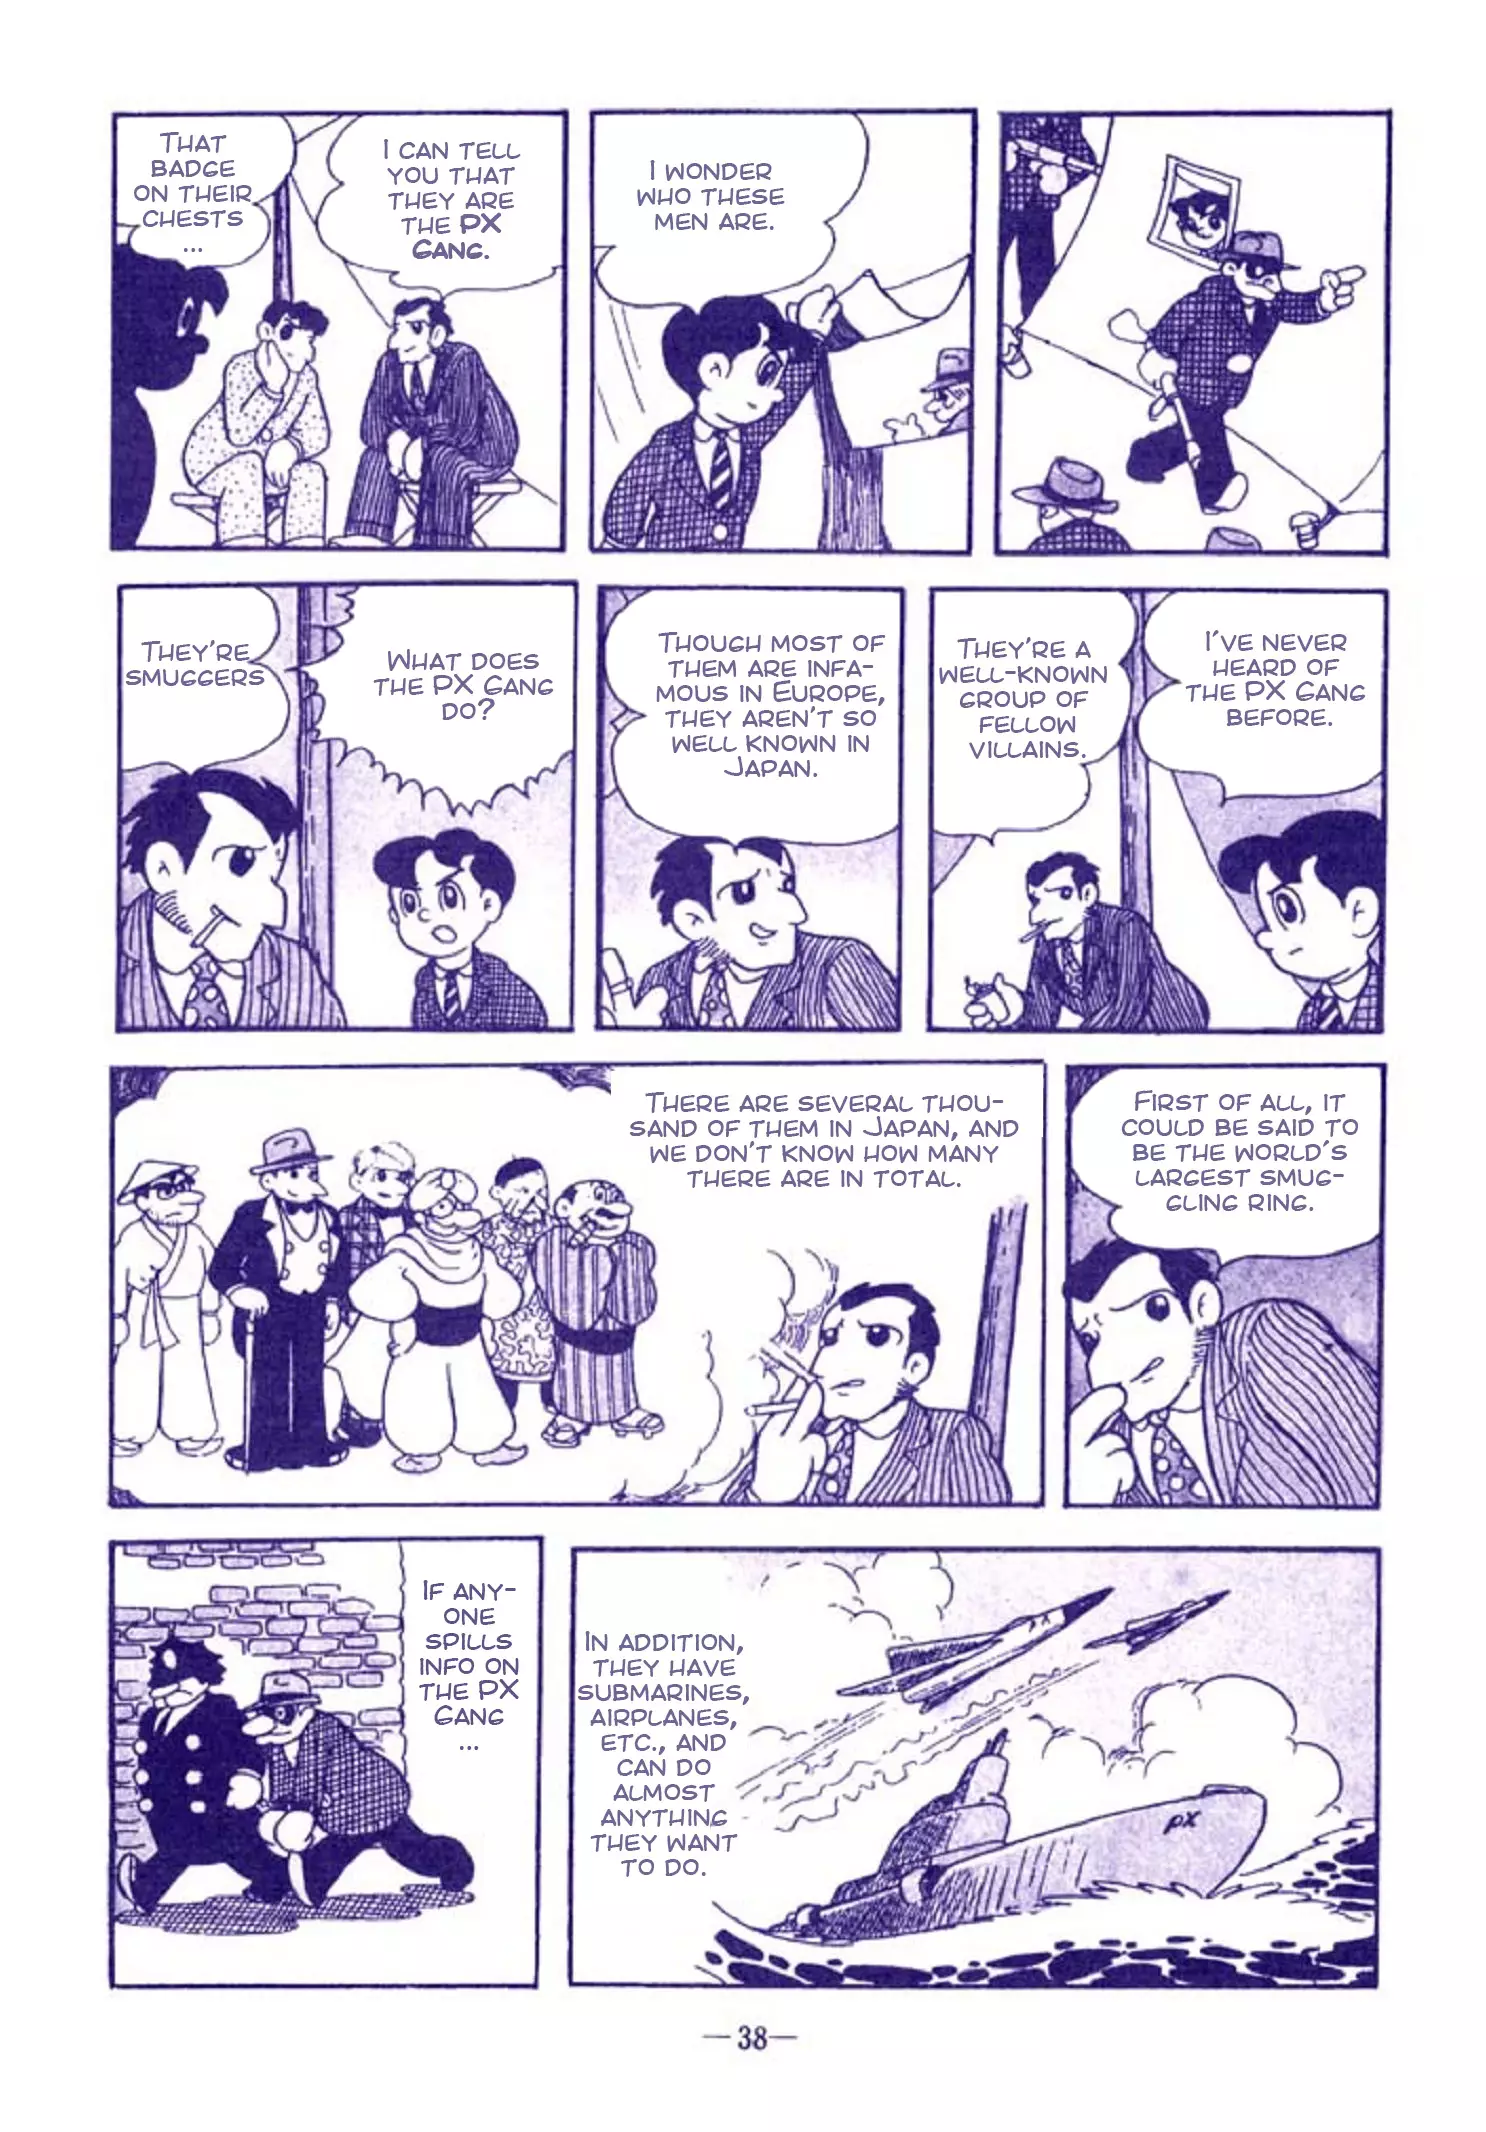 Tetsujin No. 28 Full Length Detective Manga - 1 page 41-10942157